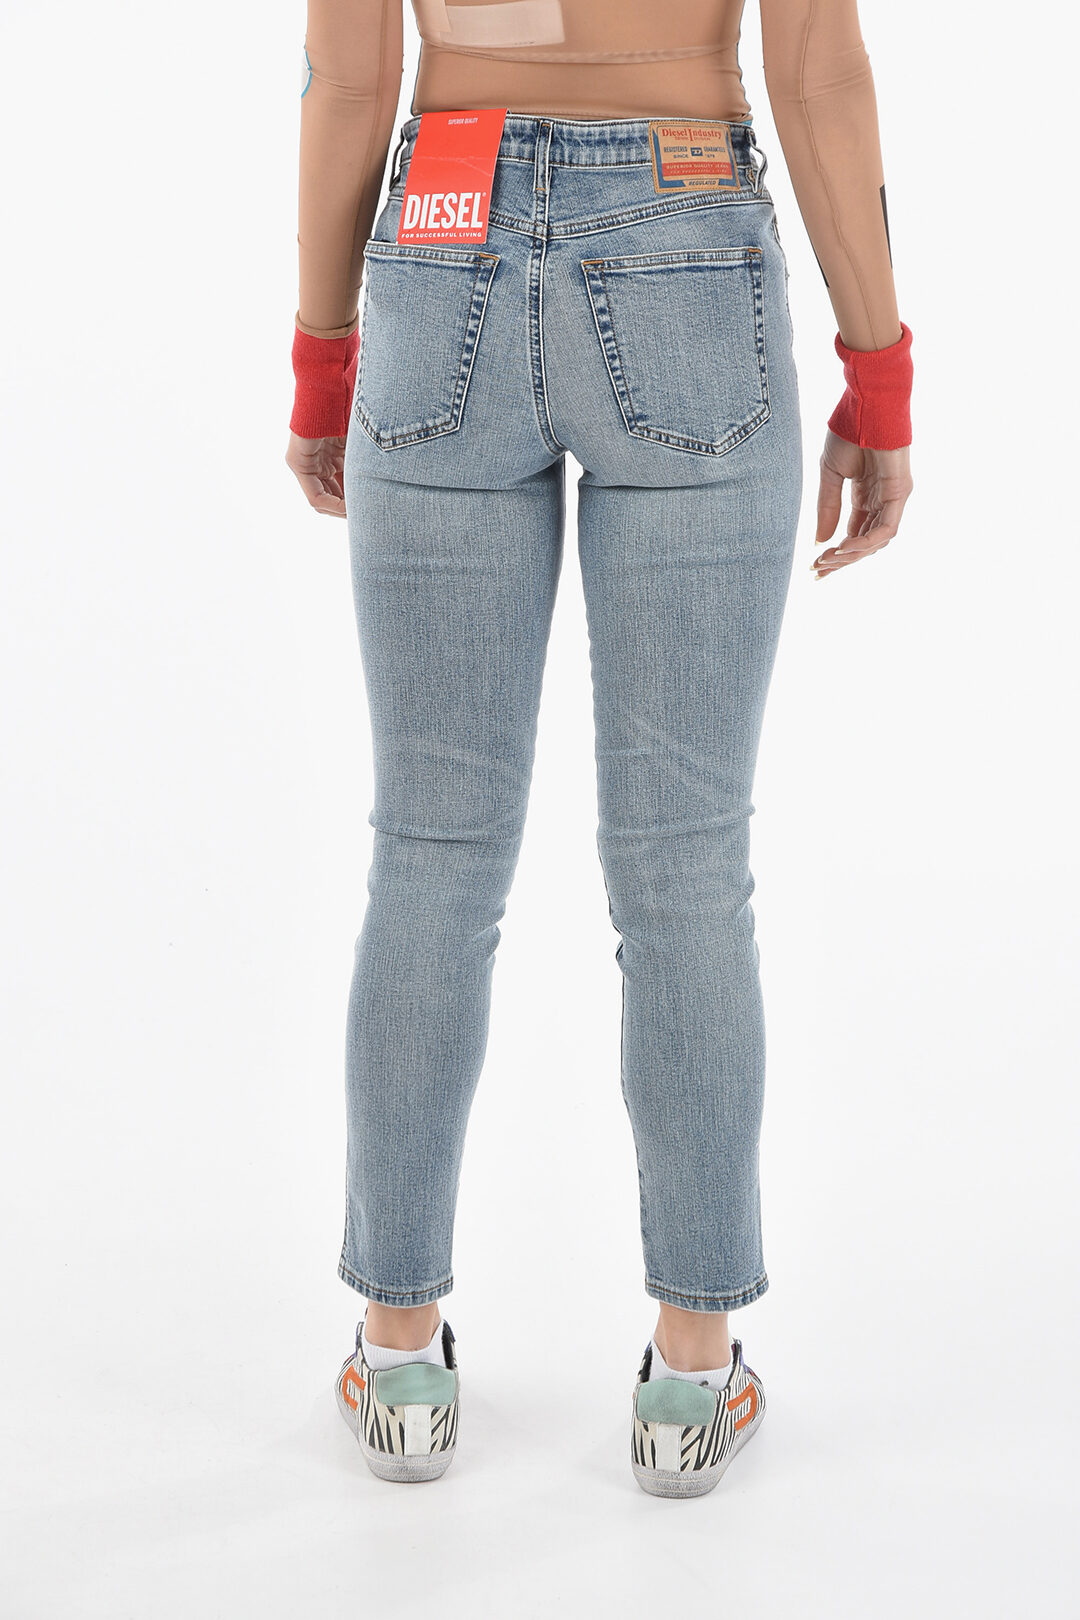 Diesel RED TAG Mid-Waist 2015 BABHILA Fit Jeans 14cm L30 women - Glamood